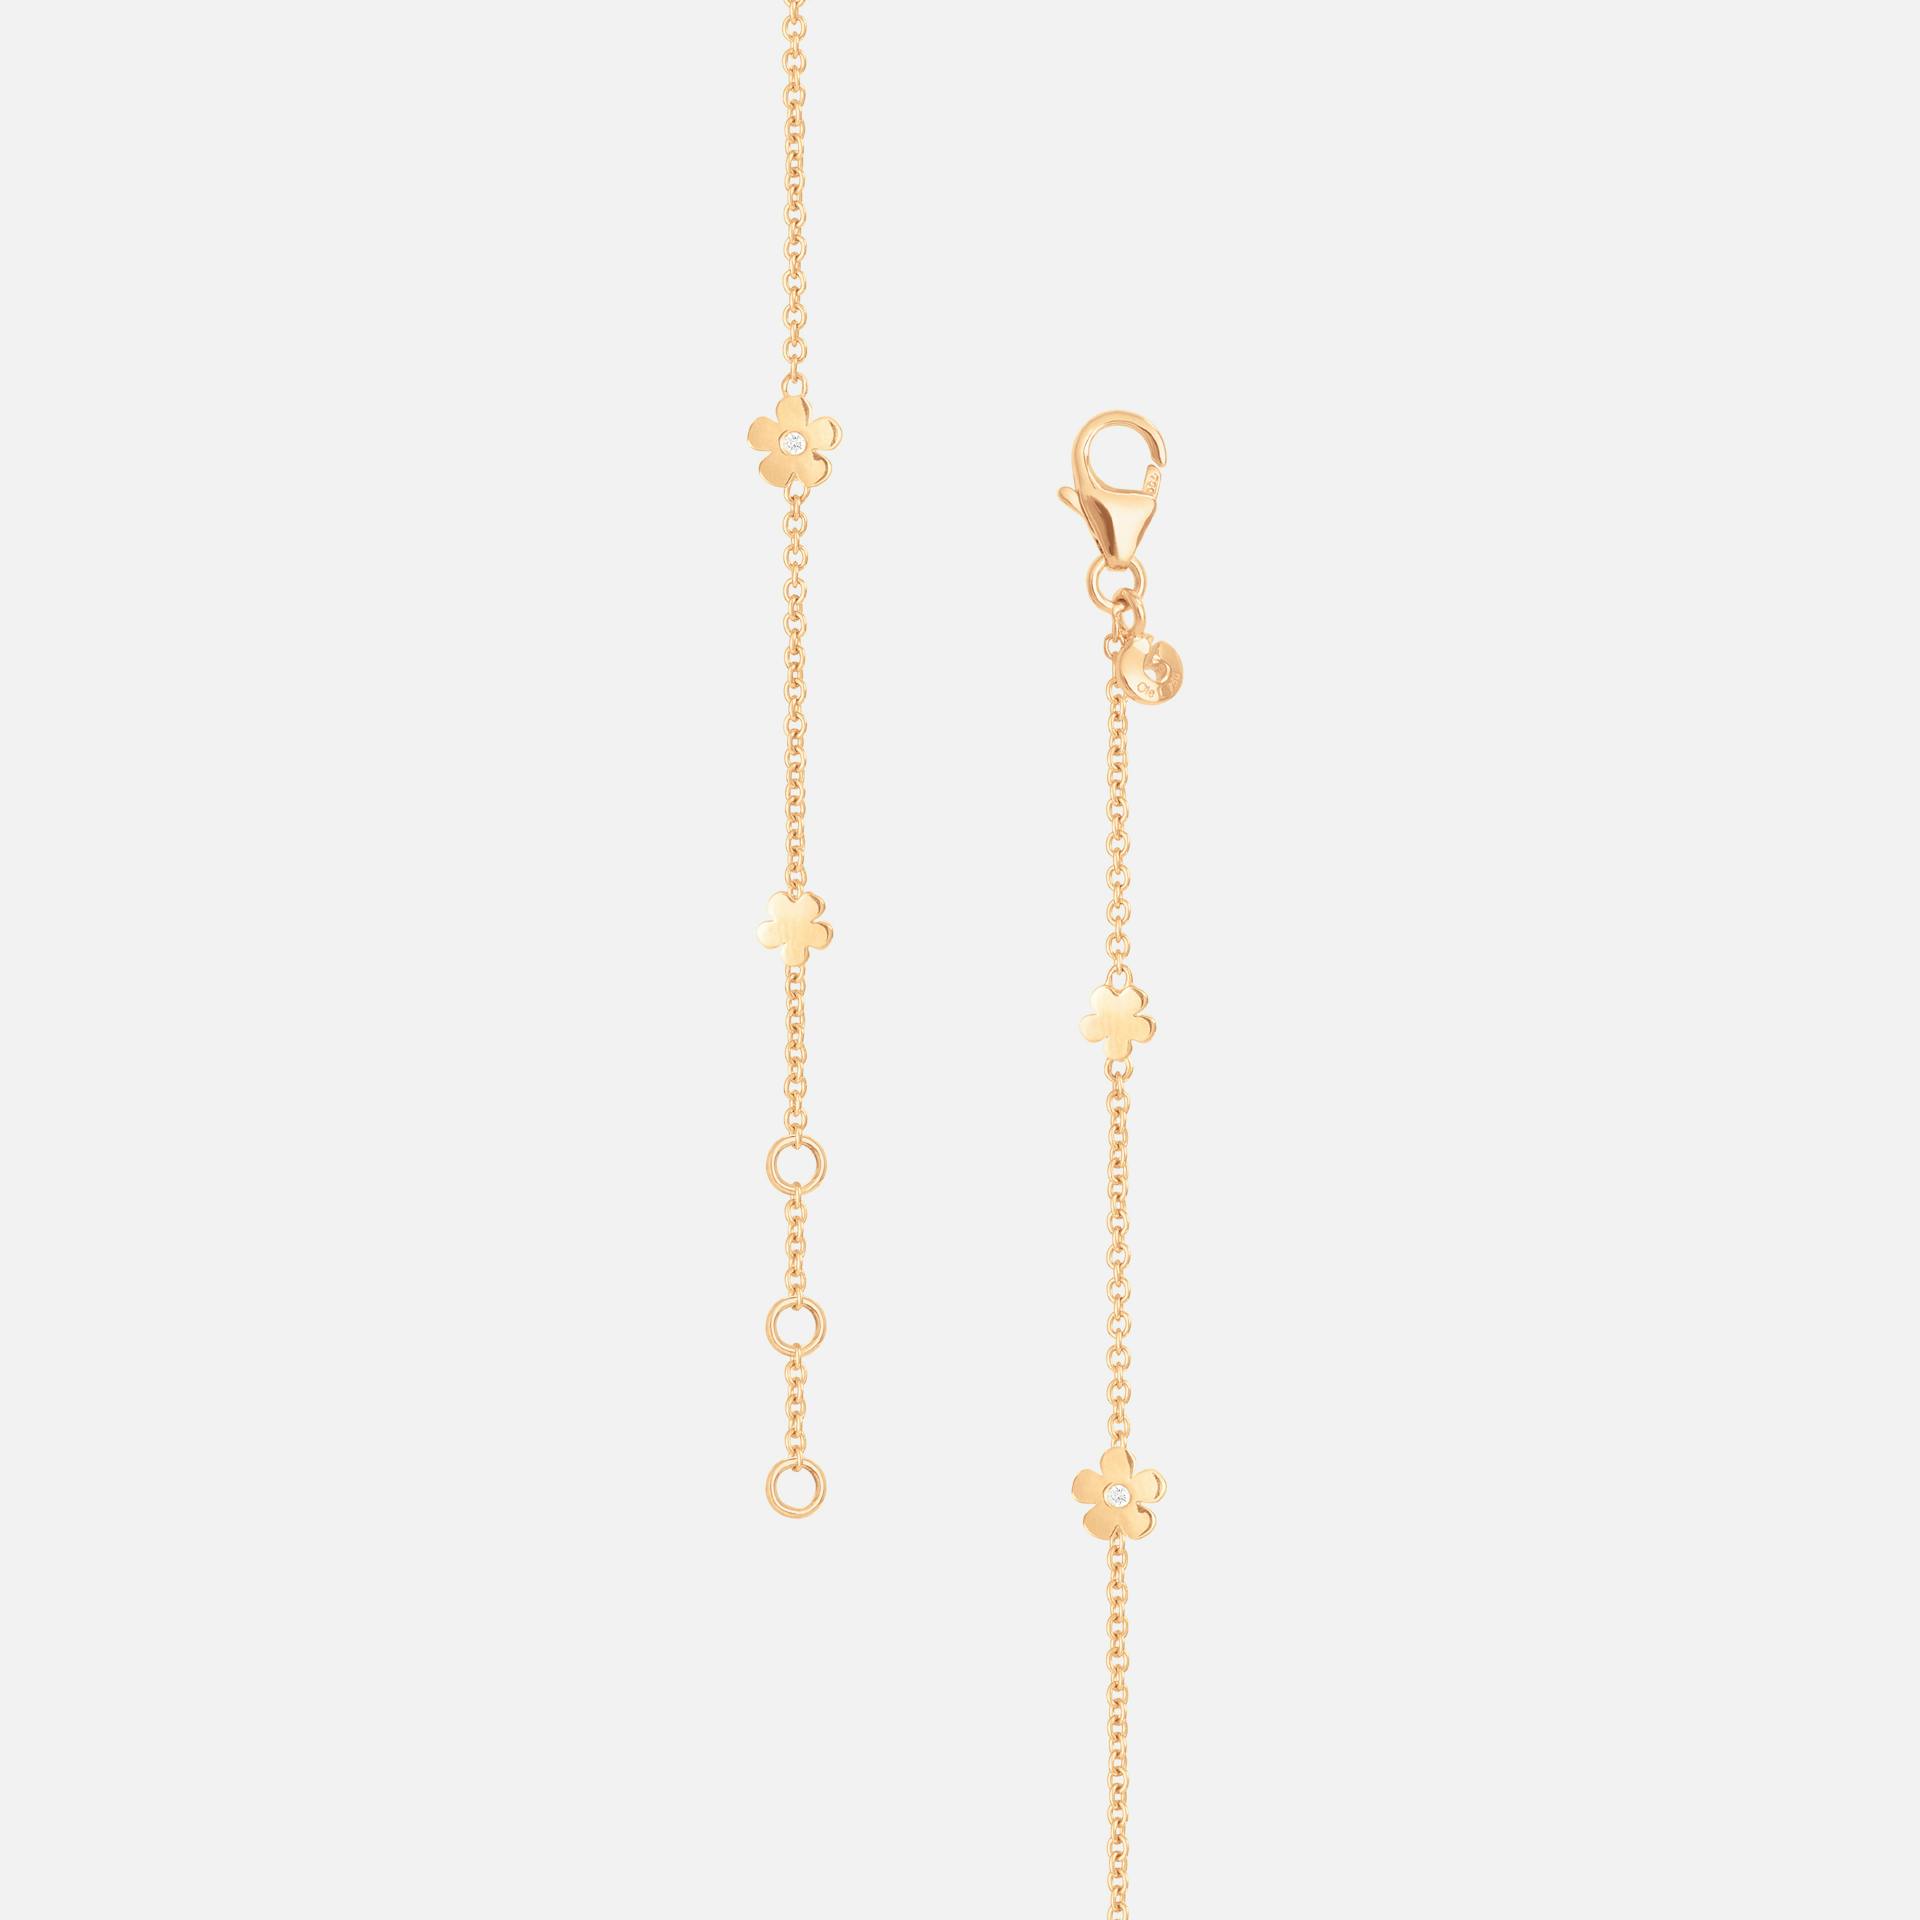 Lace armbånd i guld, 18 cm med karabinlås | Ole Lynggaard Copenhagen